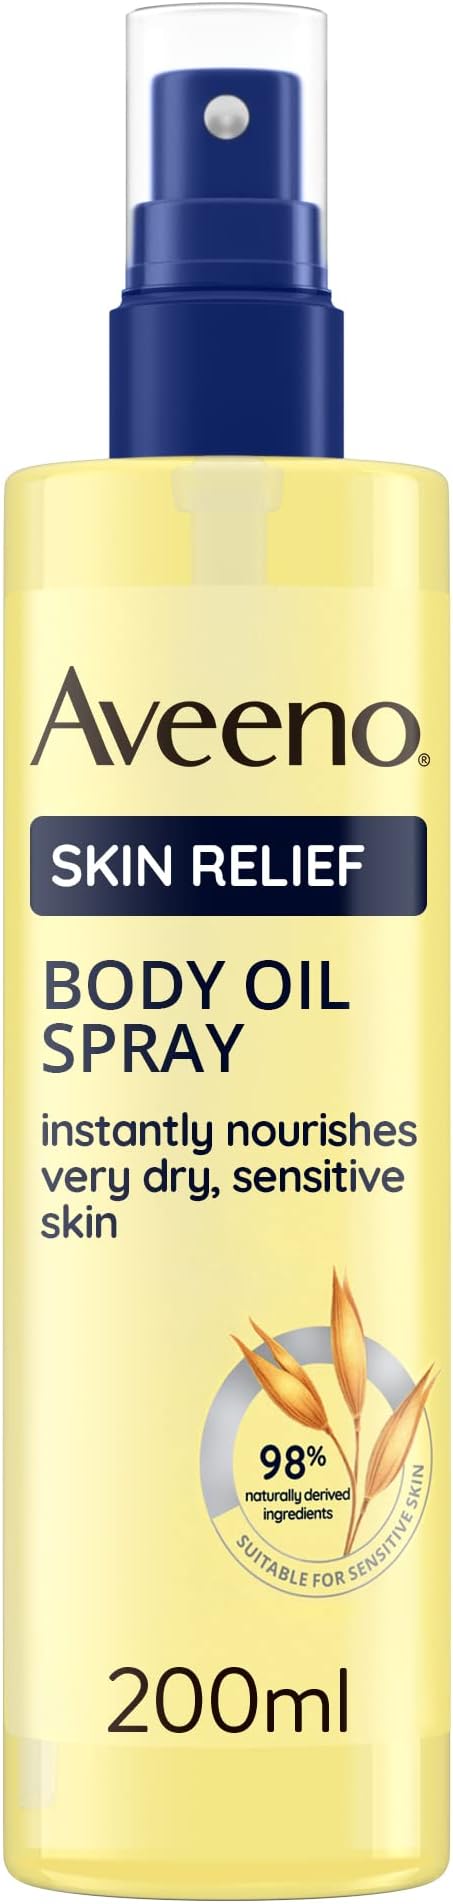 Aveeno Skin Relief Body Oil Spray,